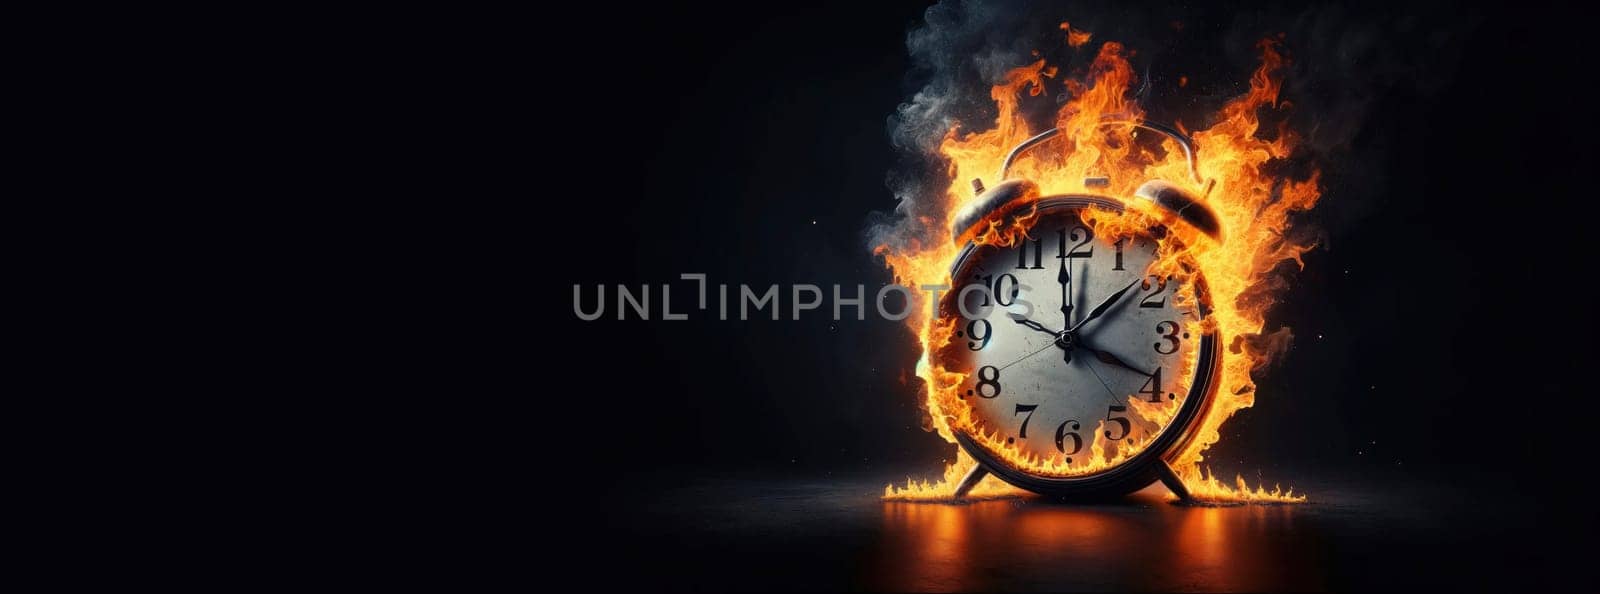 Burning Clock Dial Symbolizing Ephemeral Time by andreyz